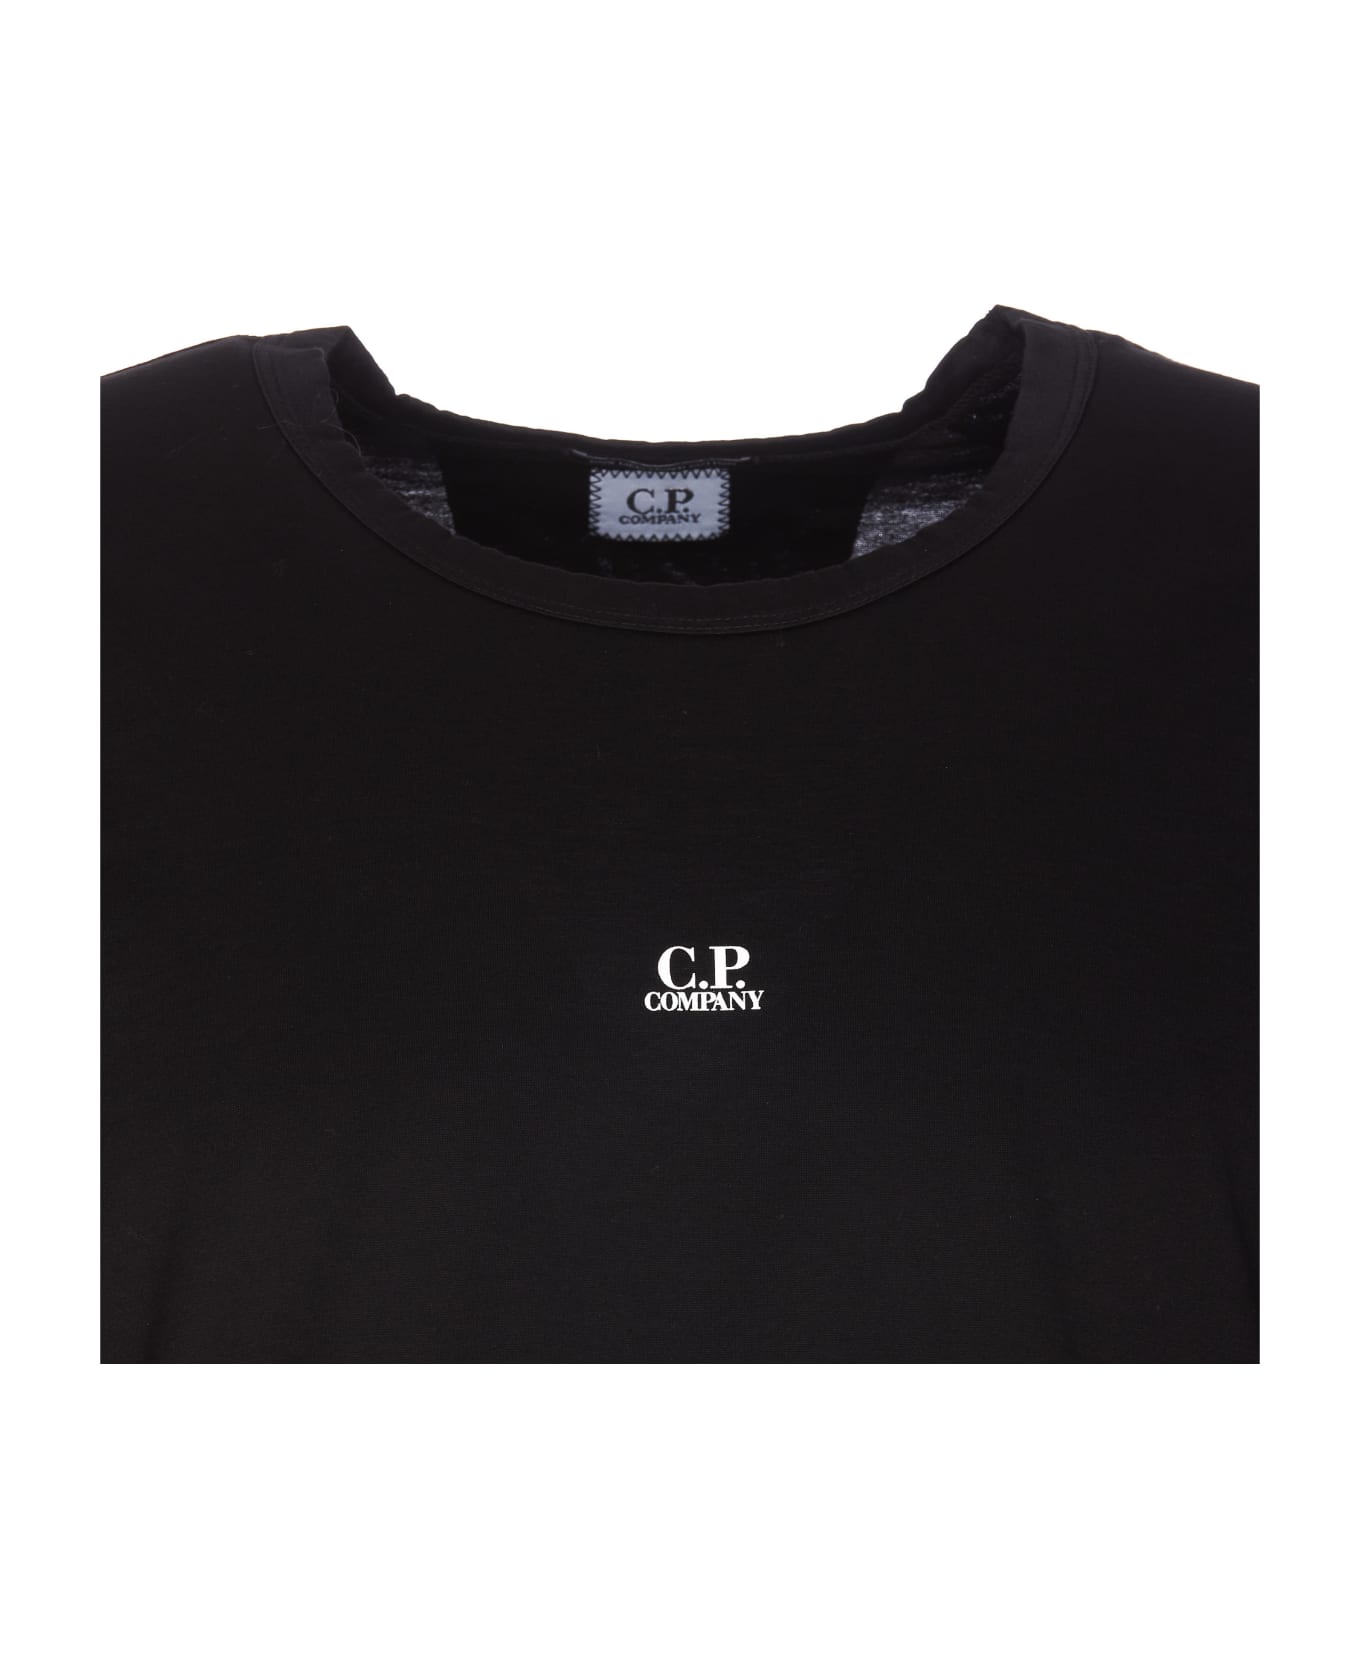 C.P. Company Logo T-shirt - Black